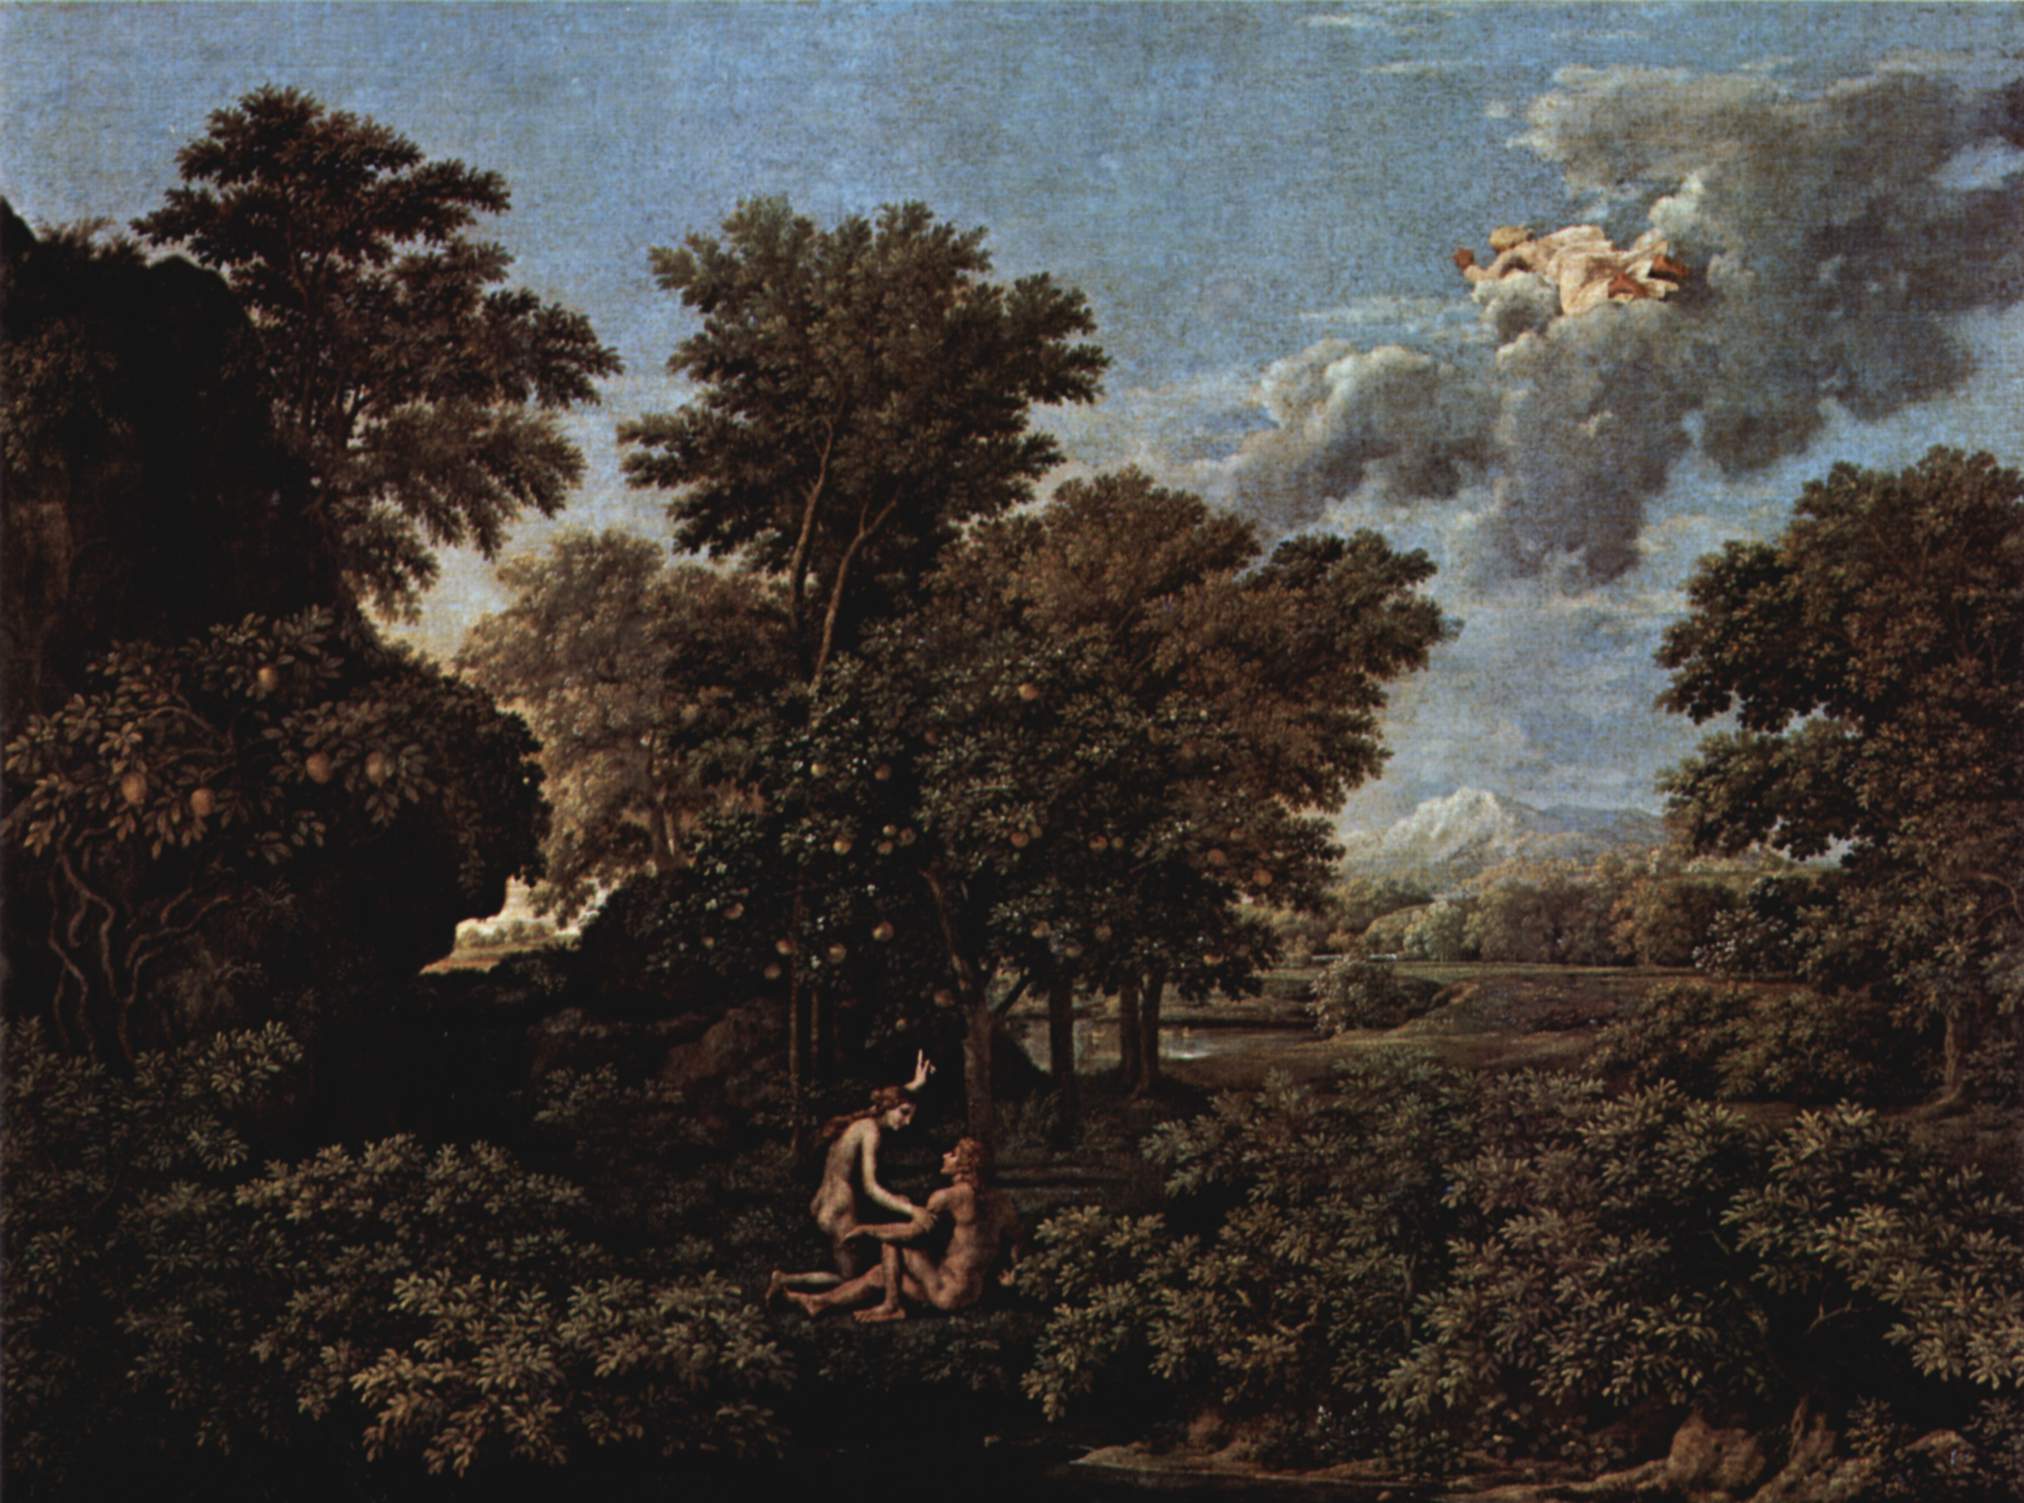 Lente (Het aardse paradijs) by Nicolas Poussin - 1664 - 117 x 160 cm 